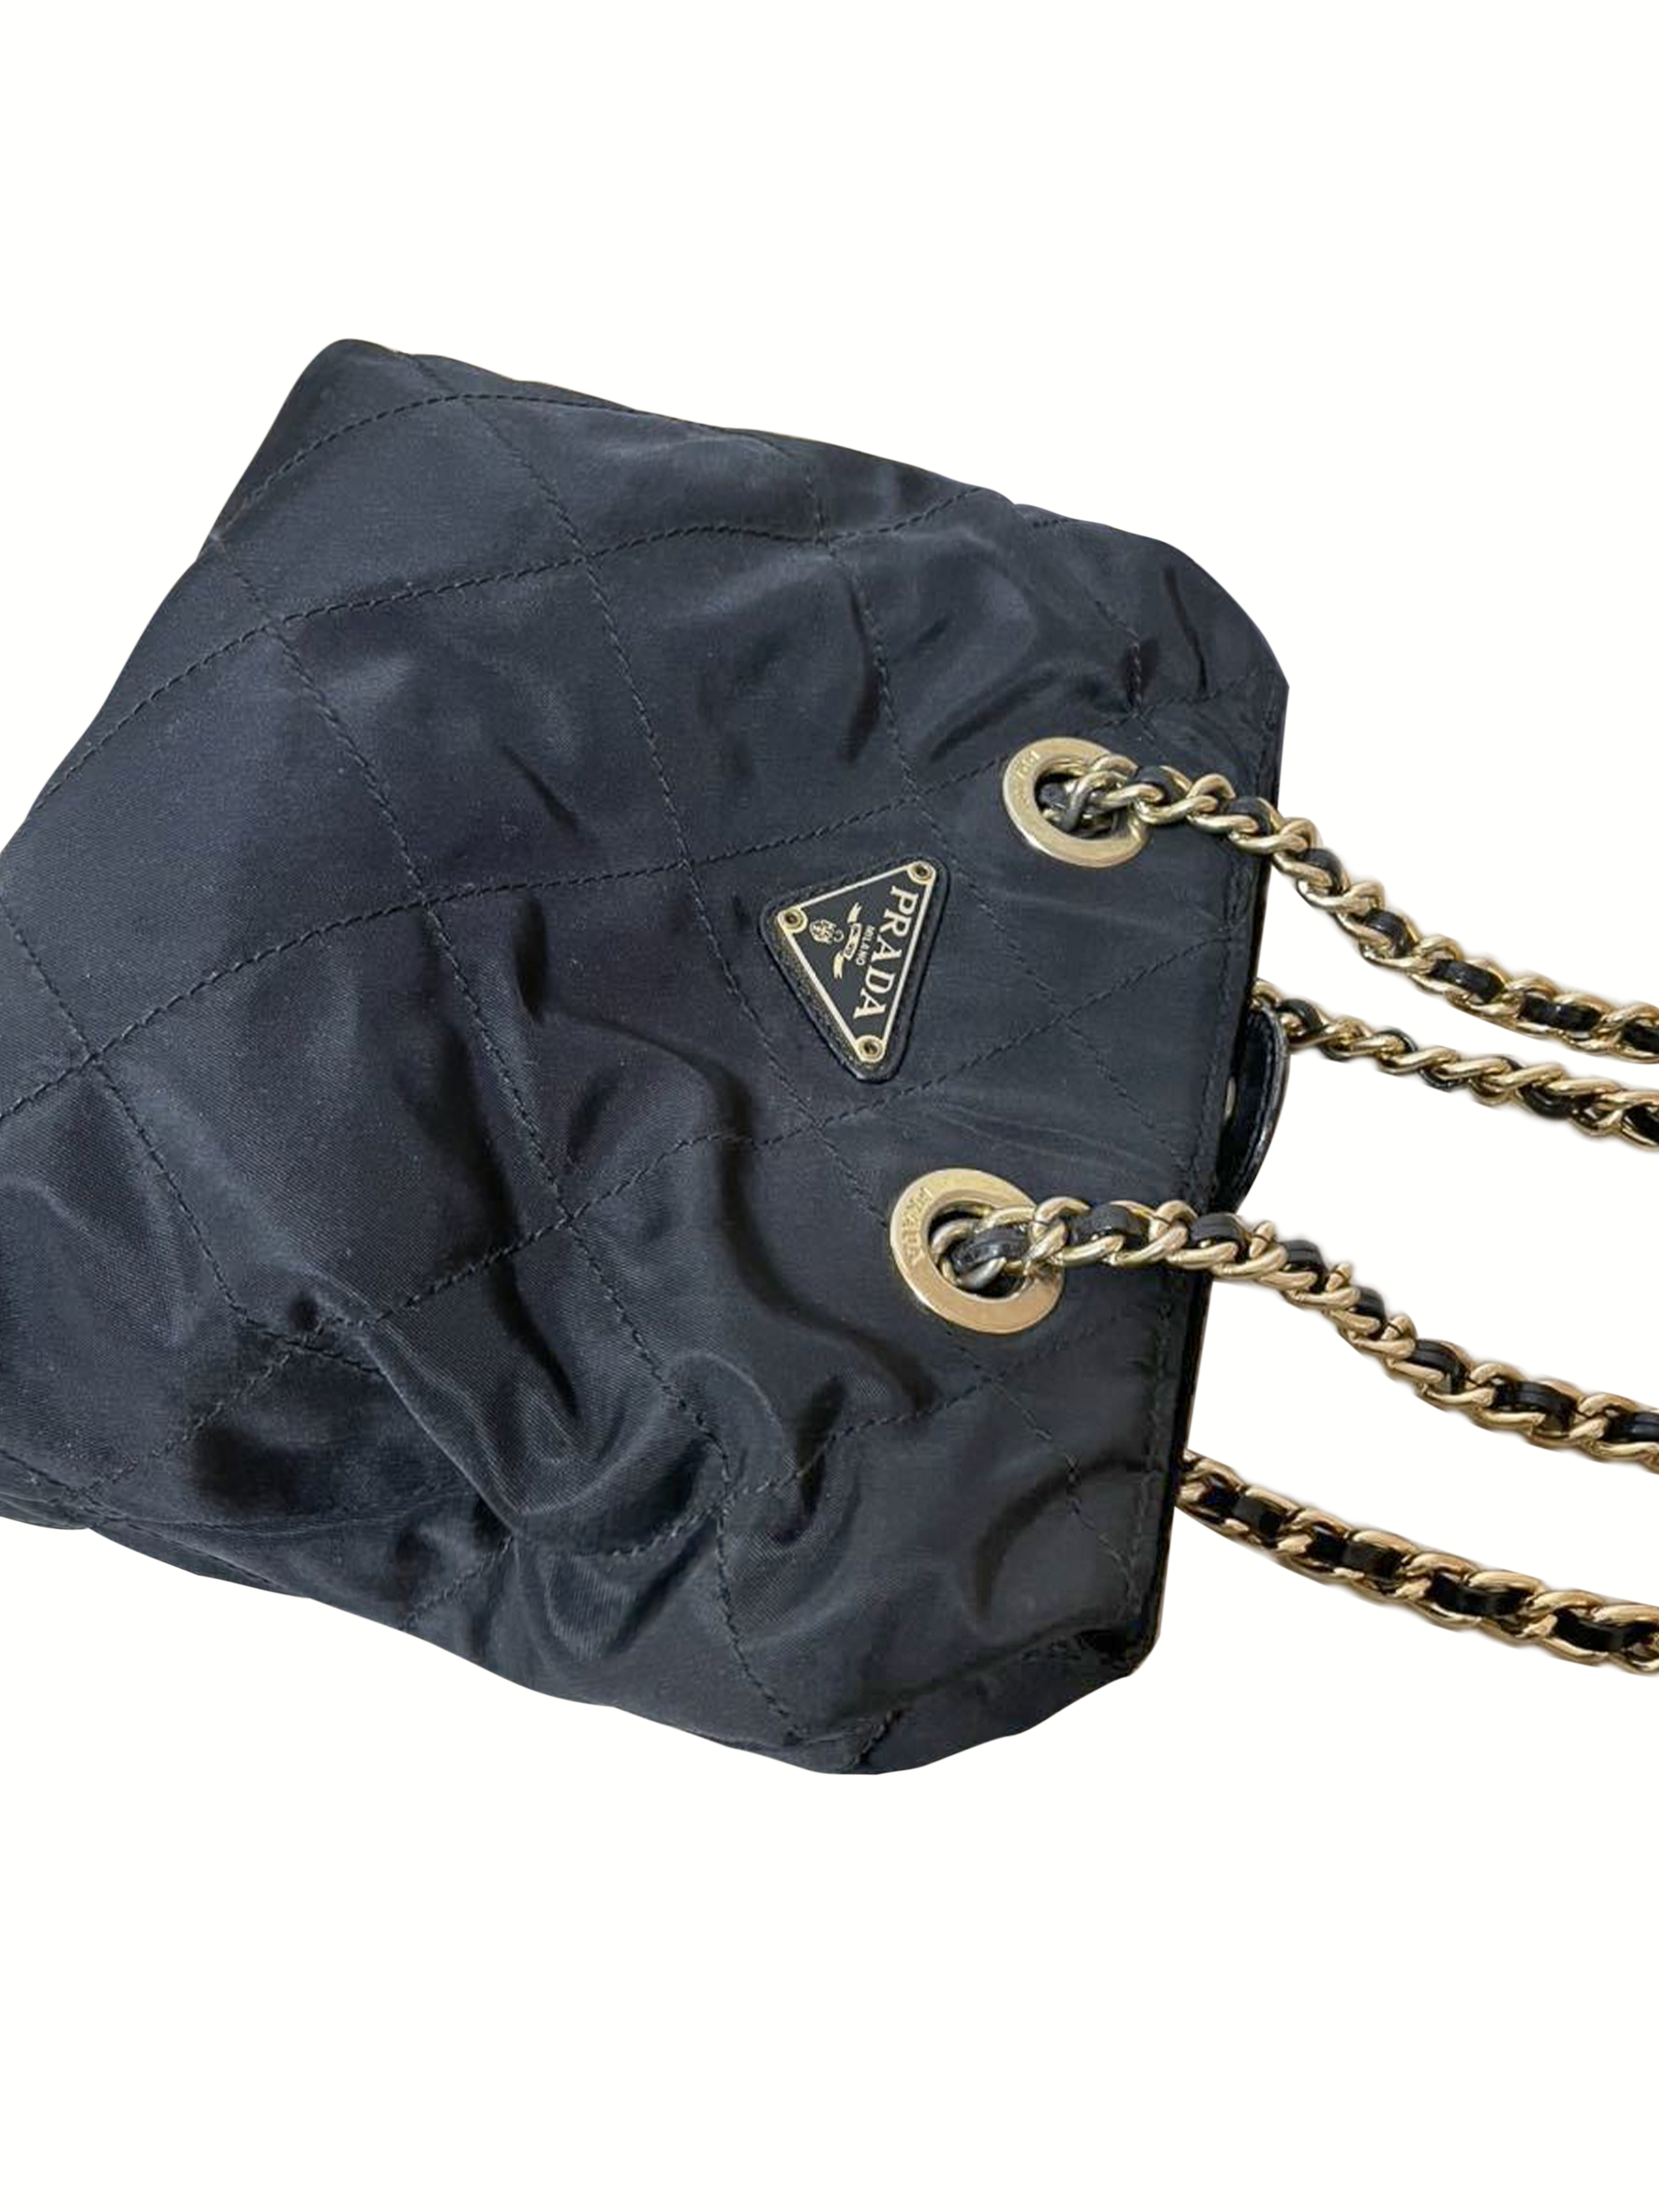 Prada, Bags, Vintage Prada Chain Nylon Shoulder Nylon